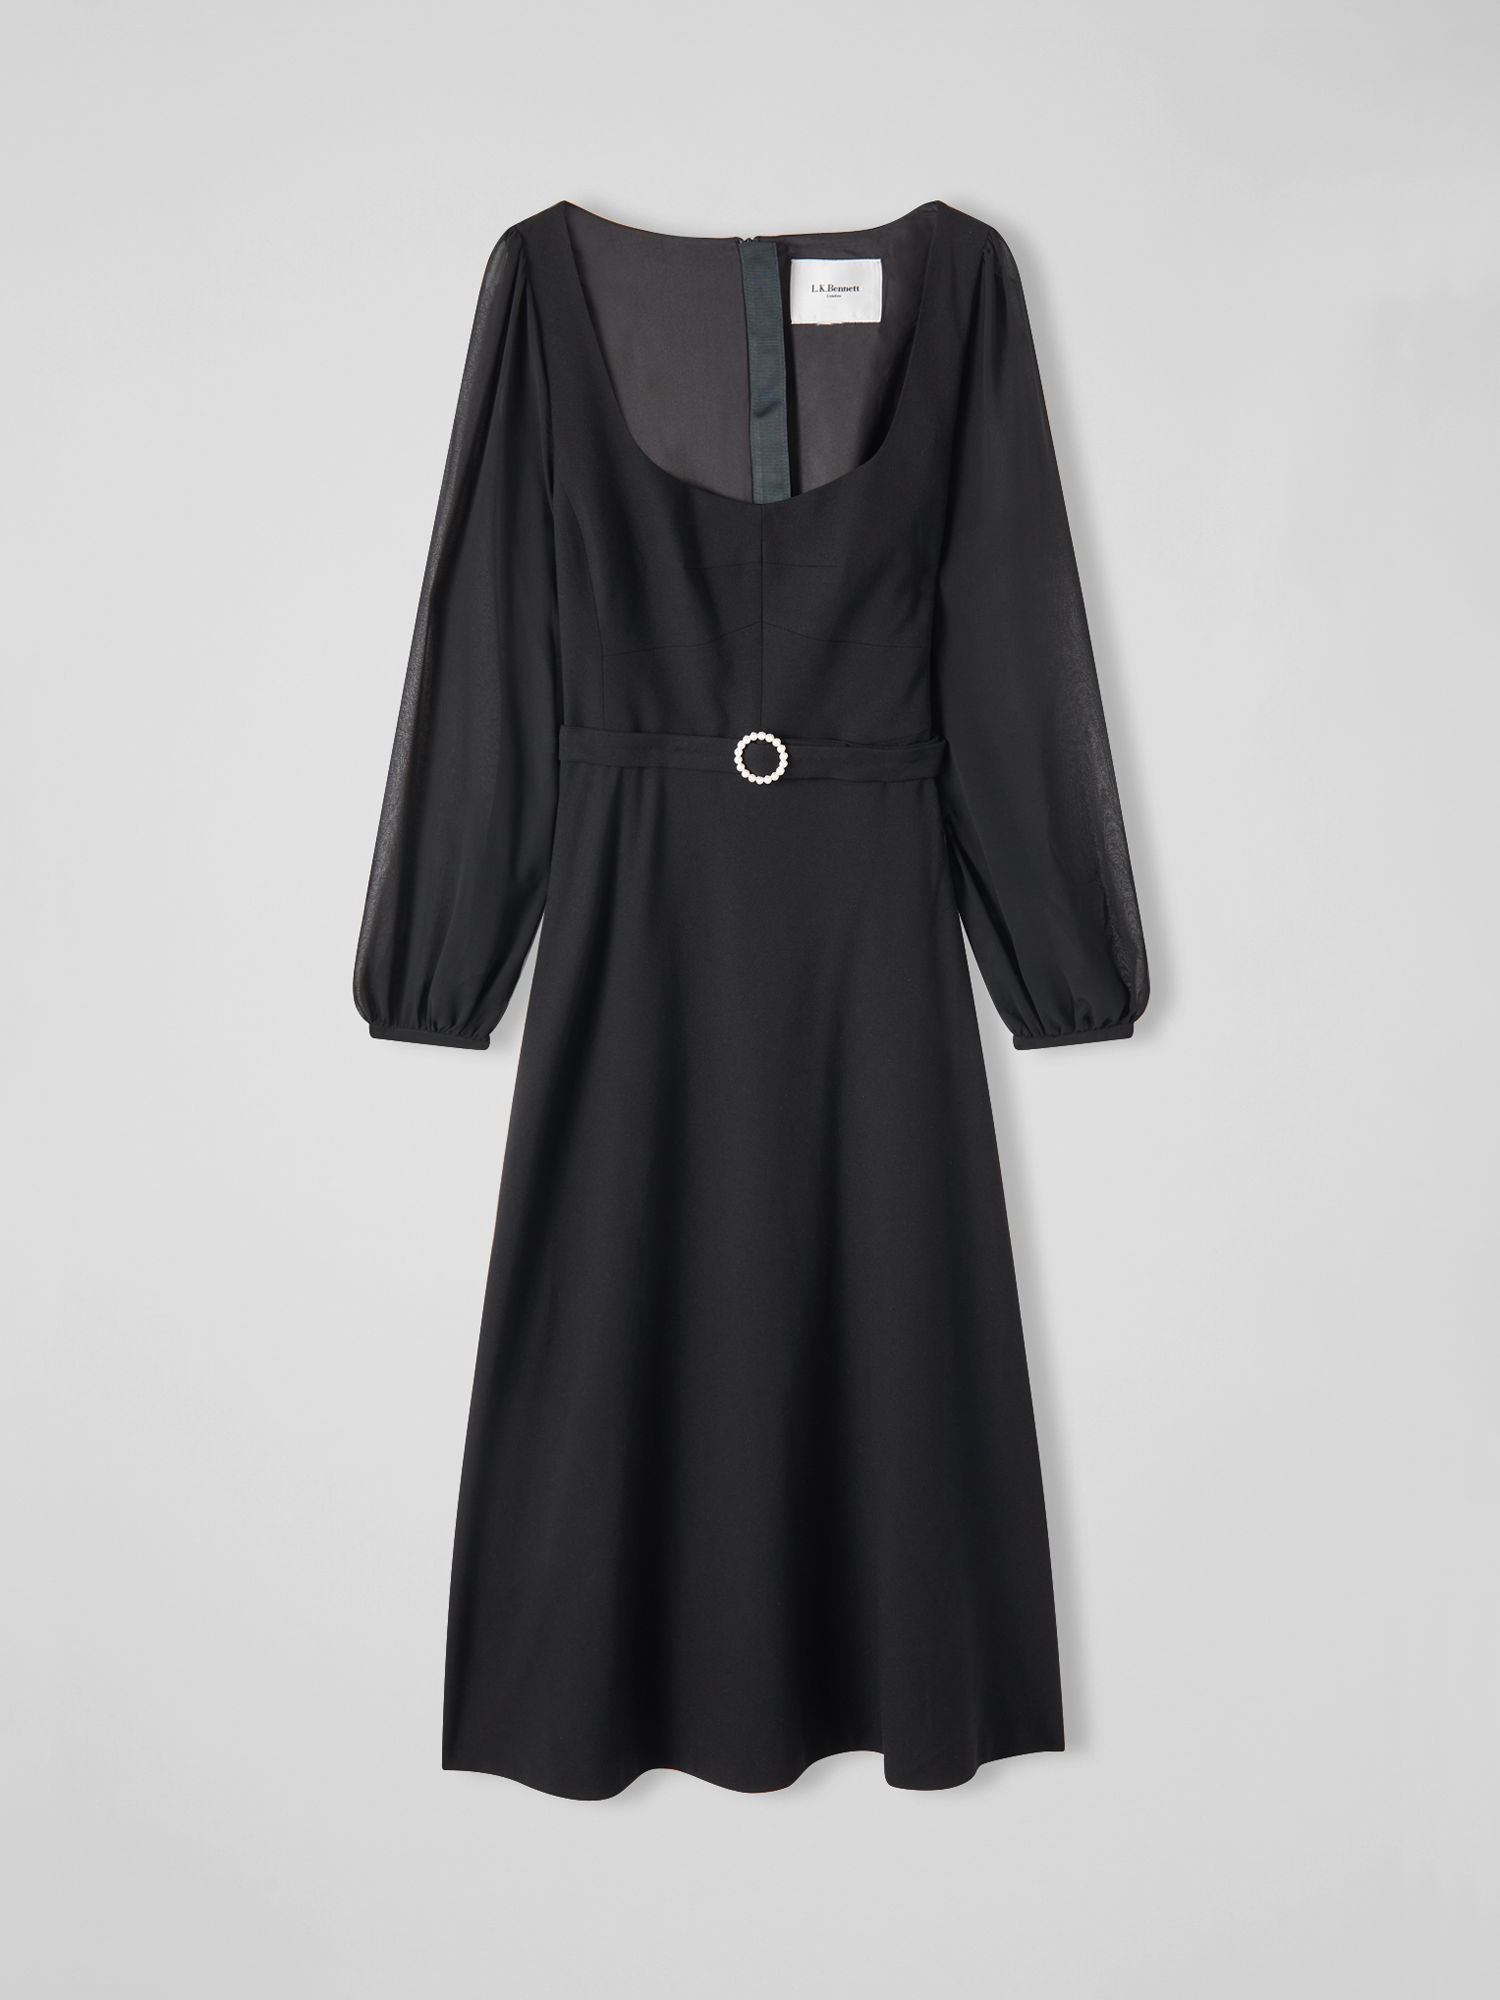 L.K.Bennett Perdy Midi Dress, Black at John Lewis & Partners